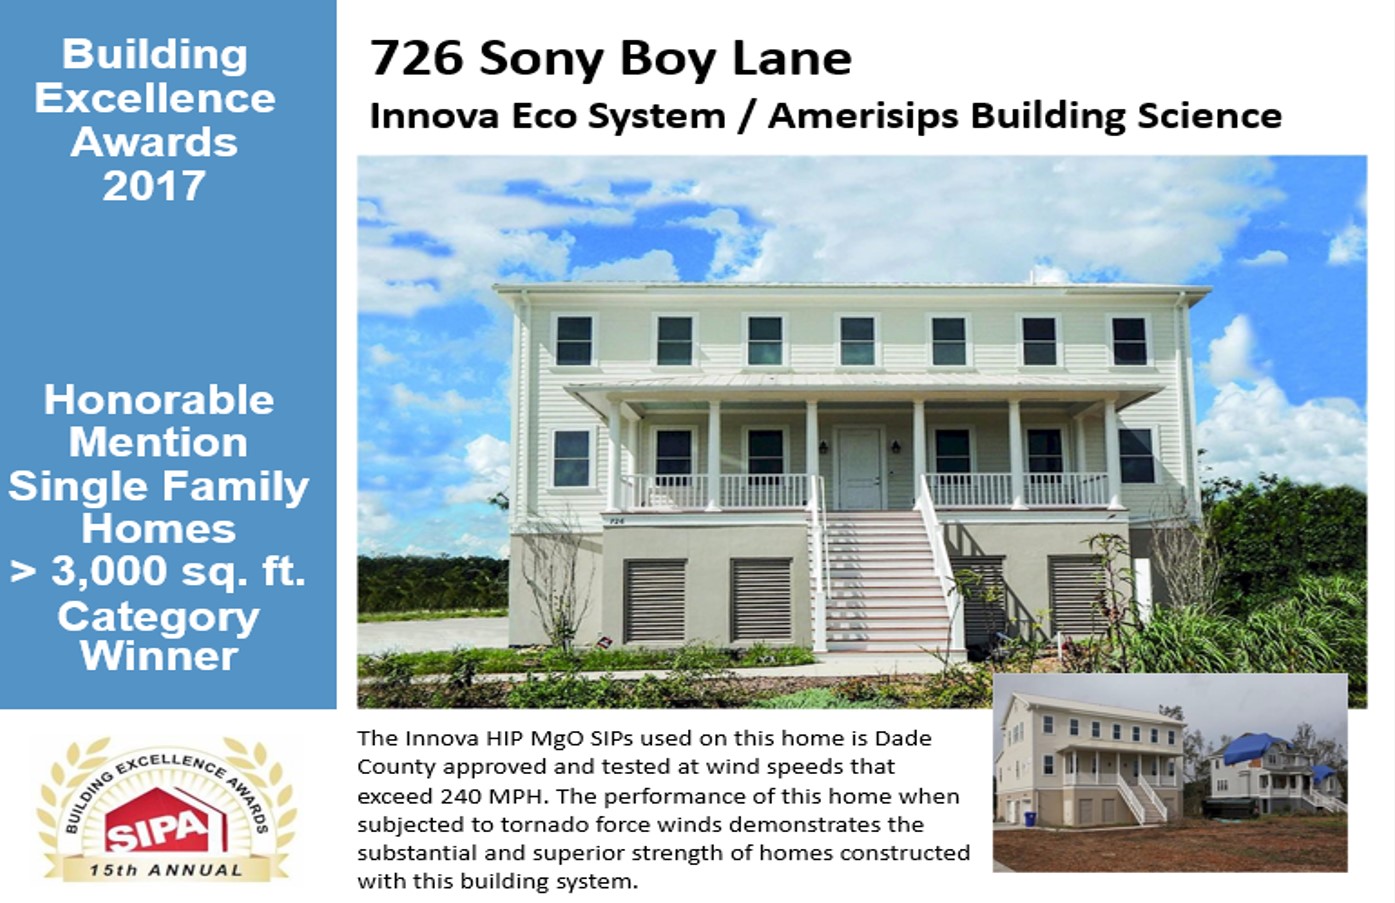 Sony Boy Lane, South Carolina